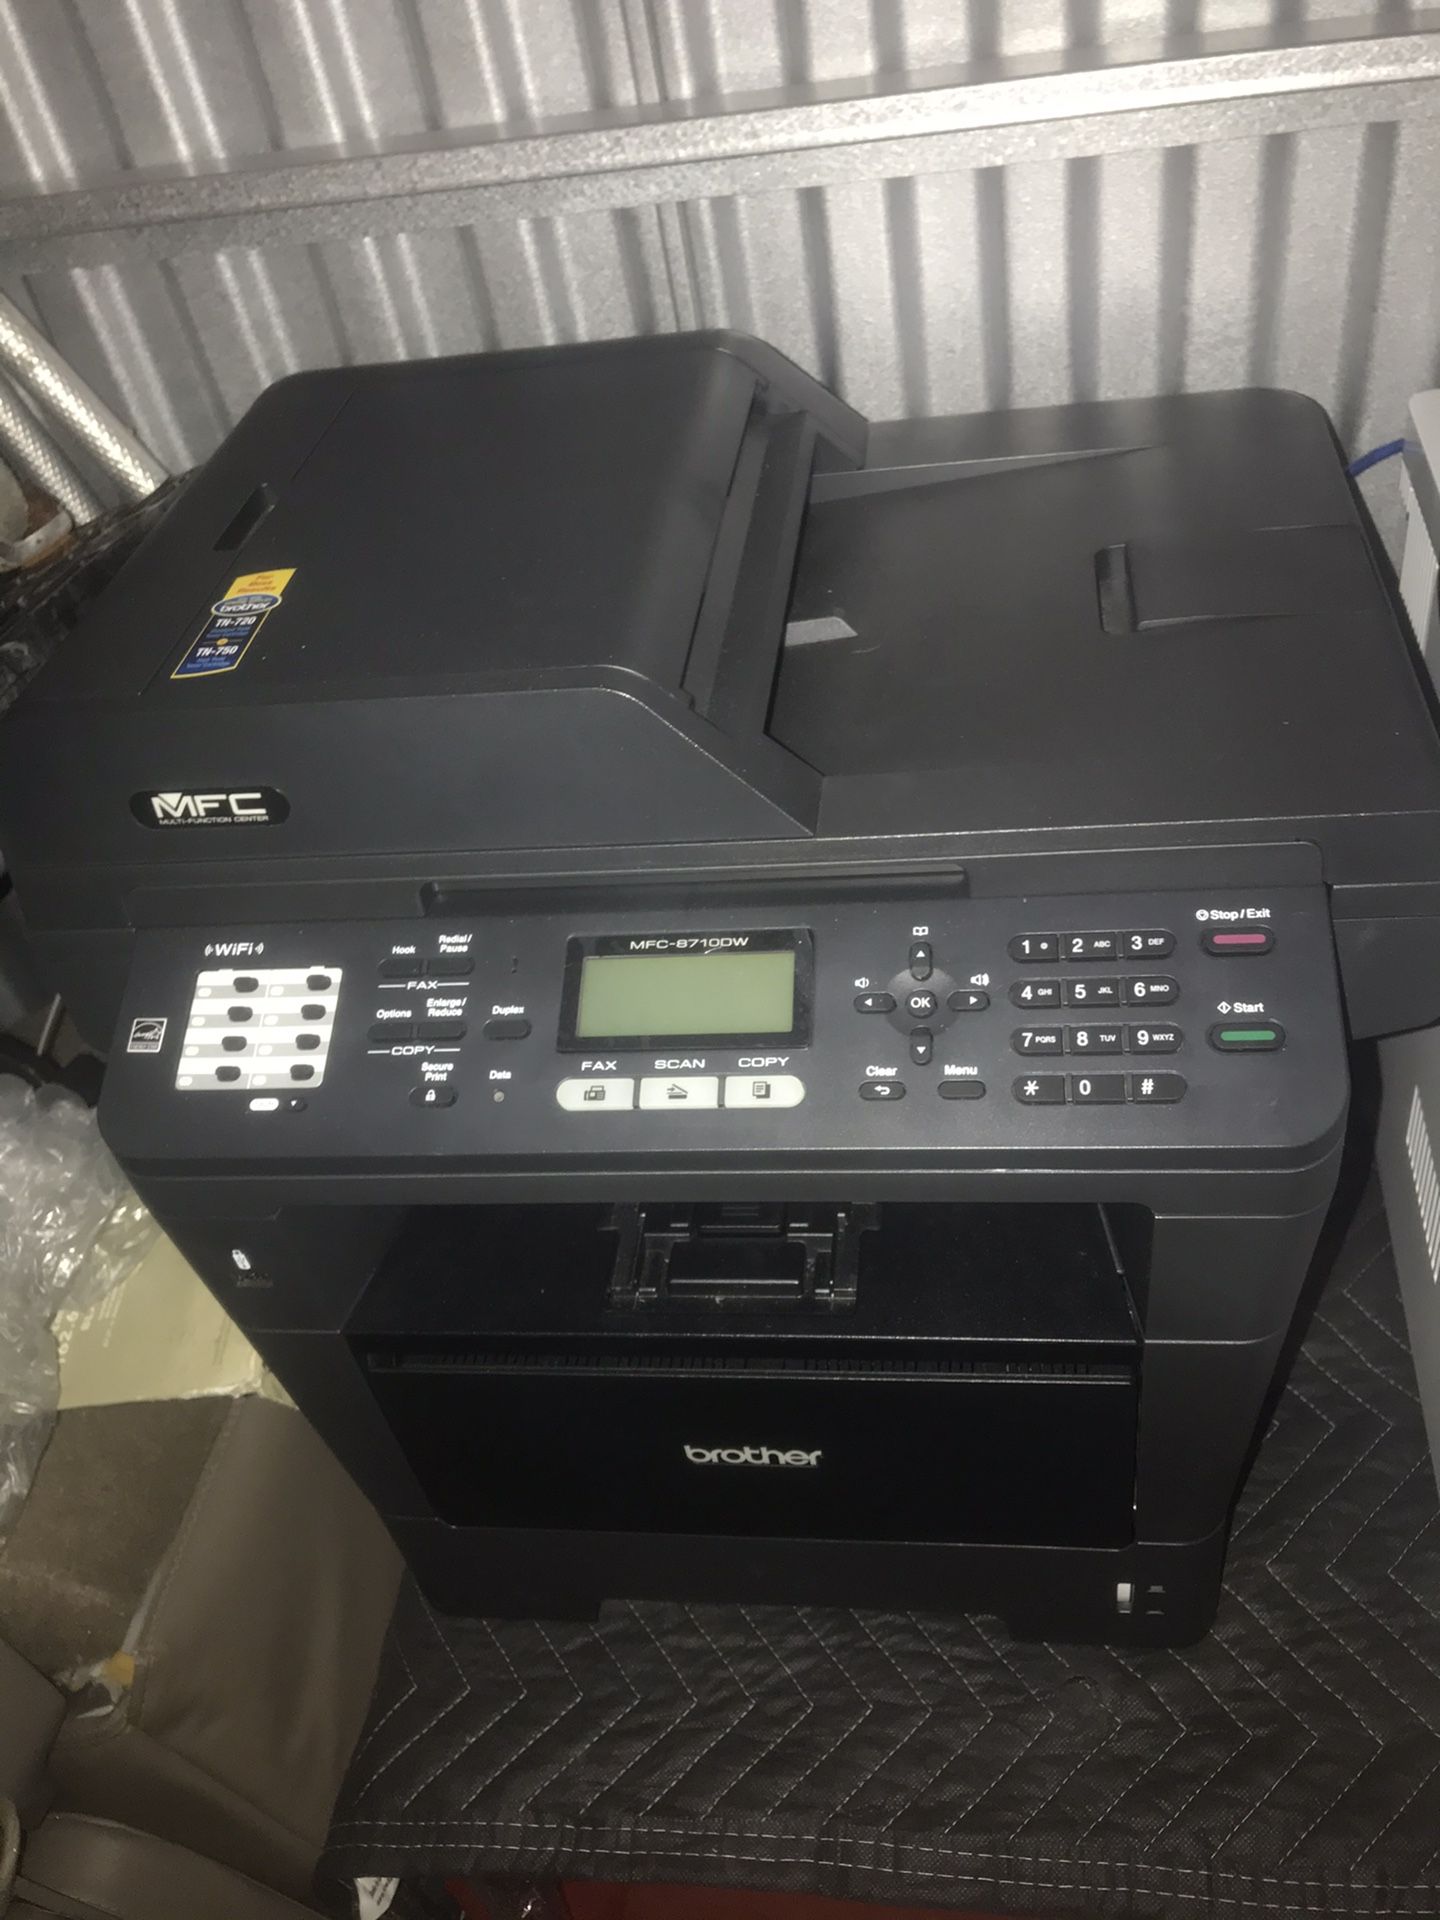 Fax Scan Copier